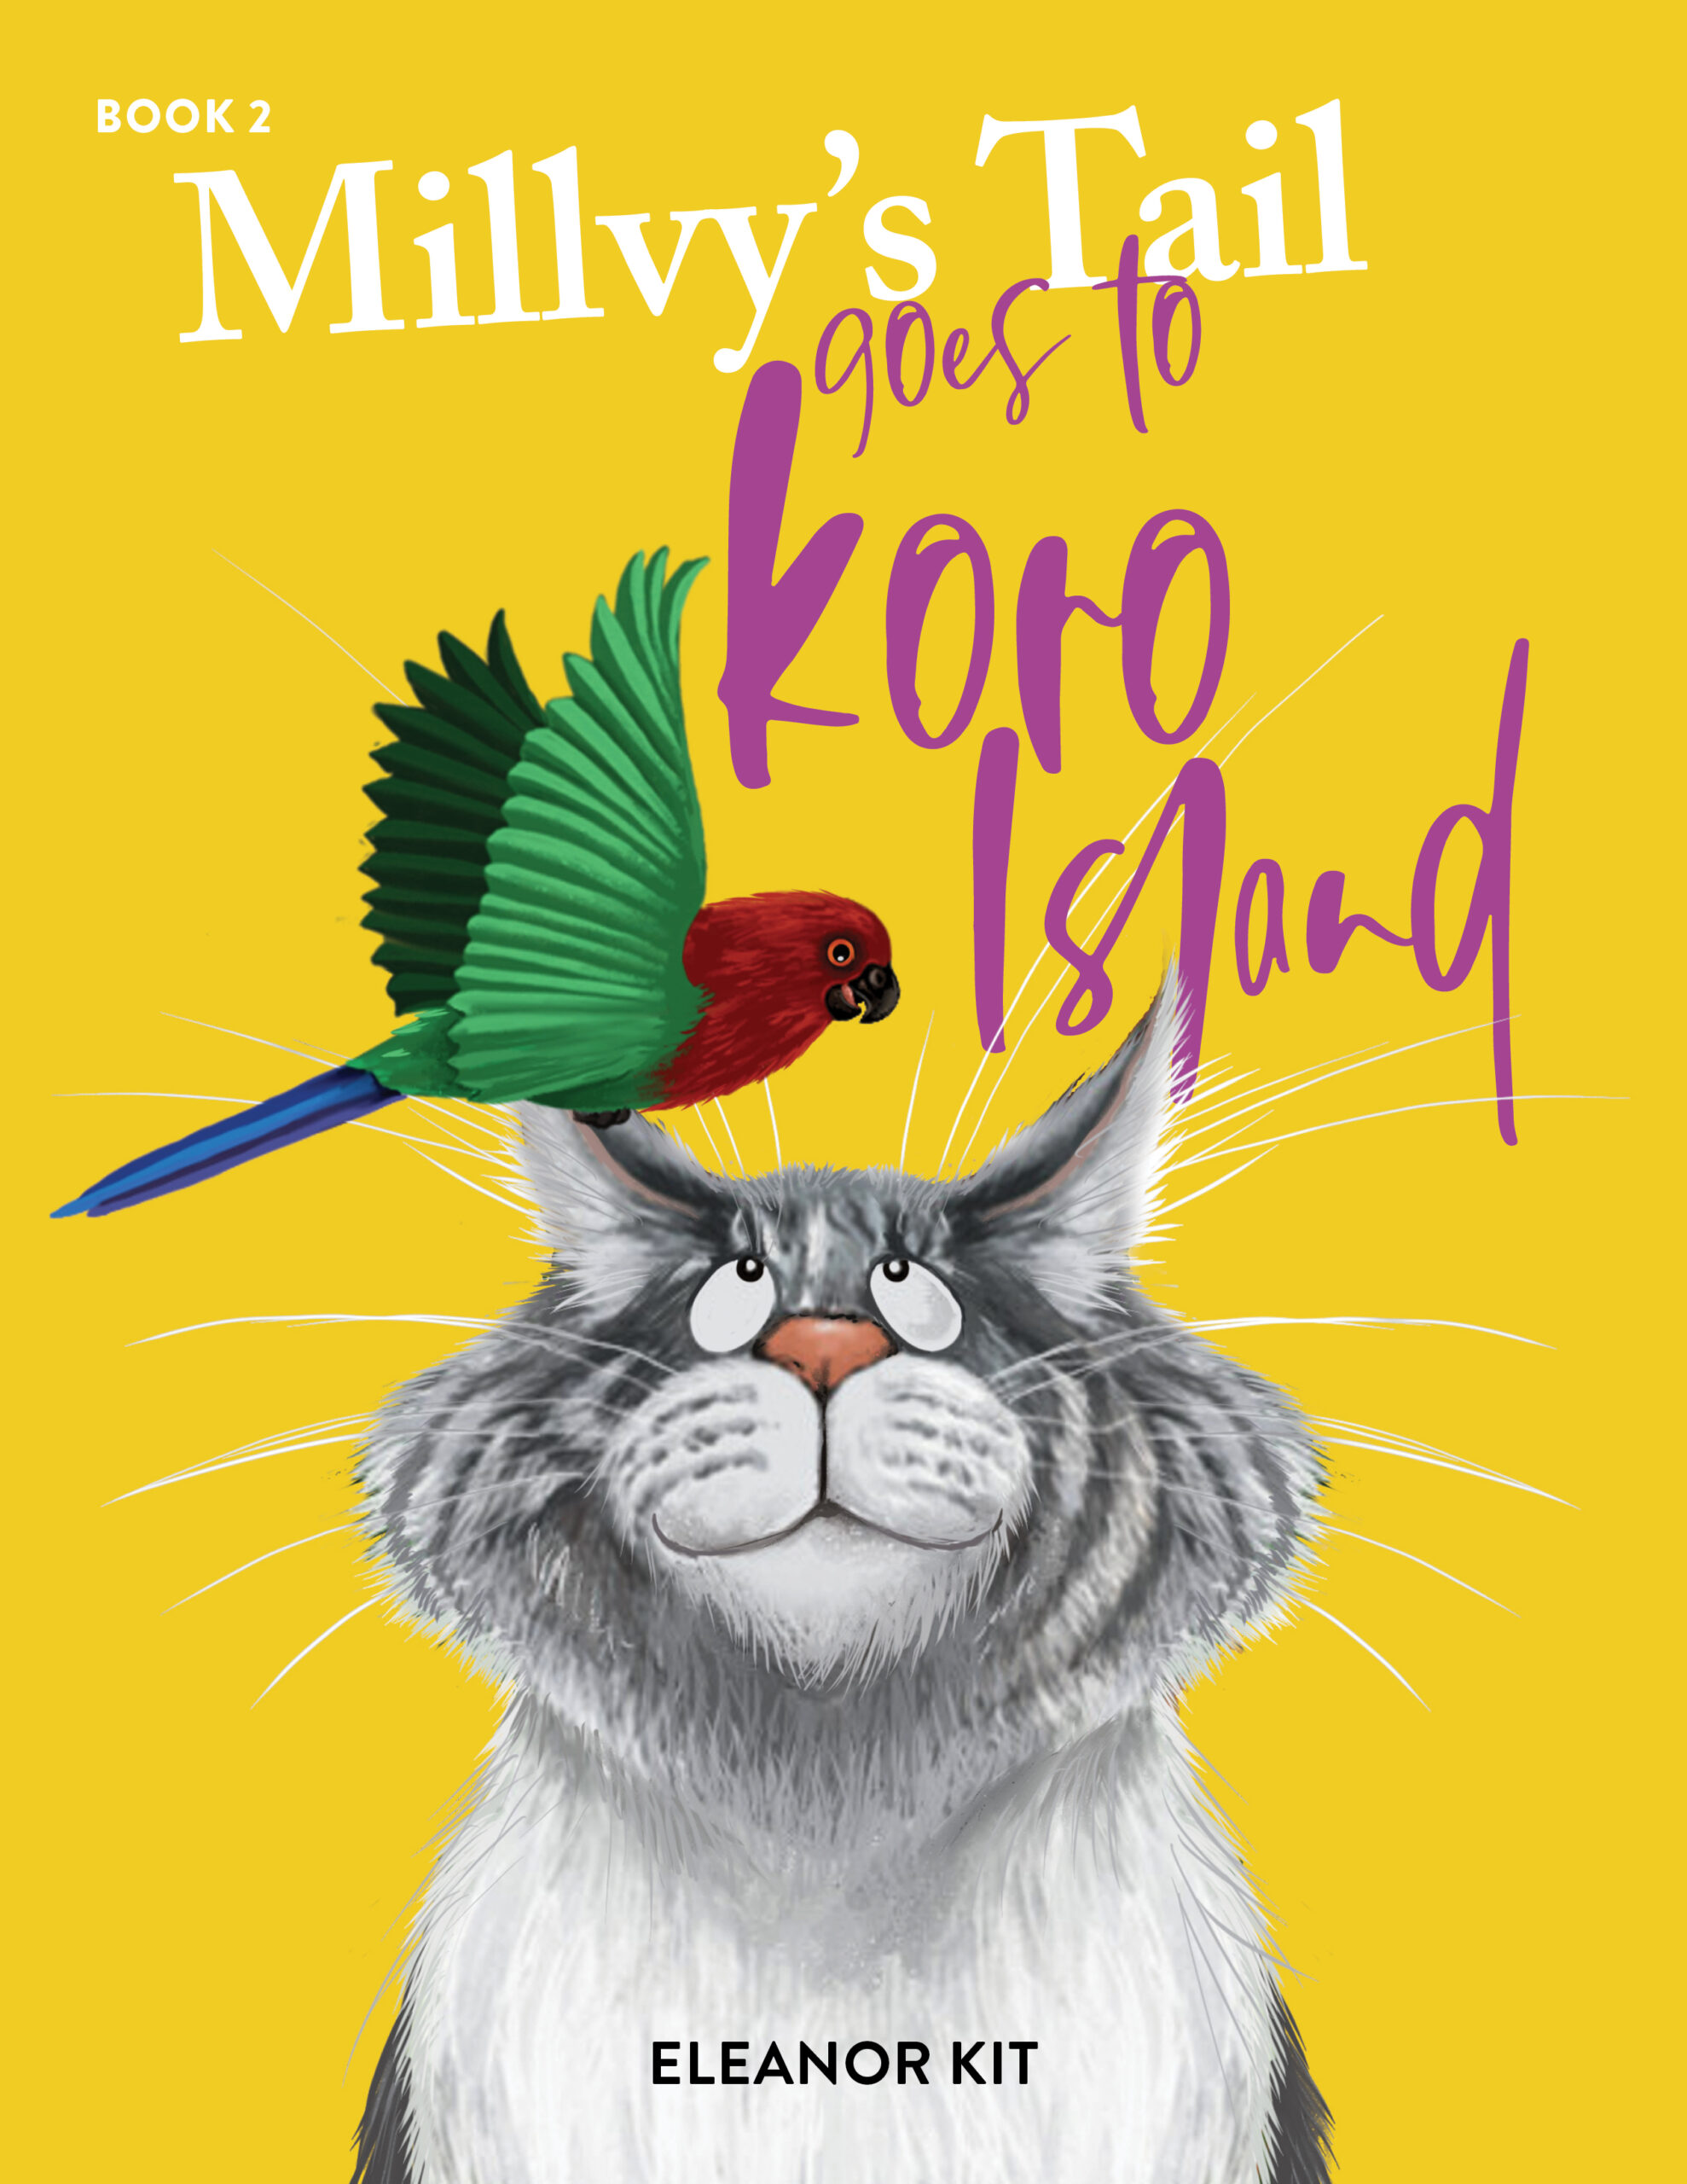 Millvy's Tail goes to Koro Island